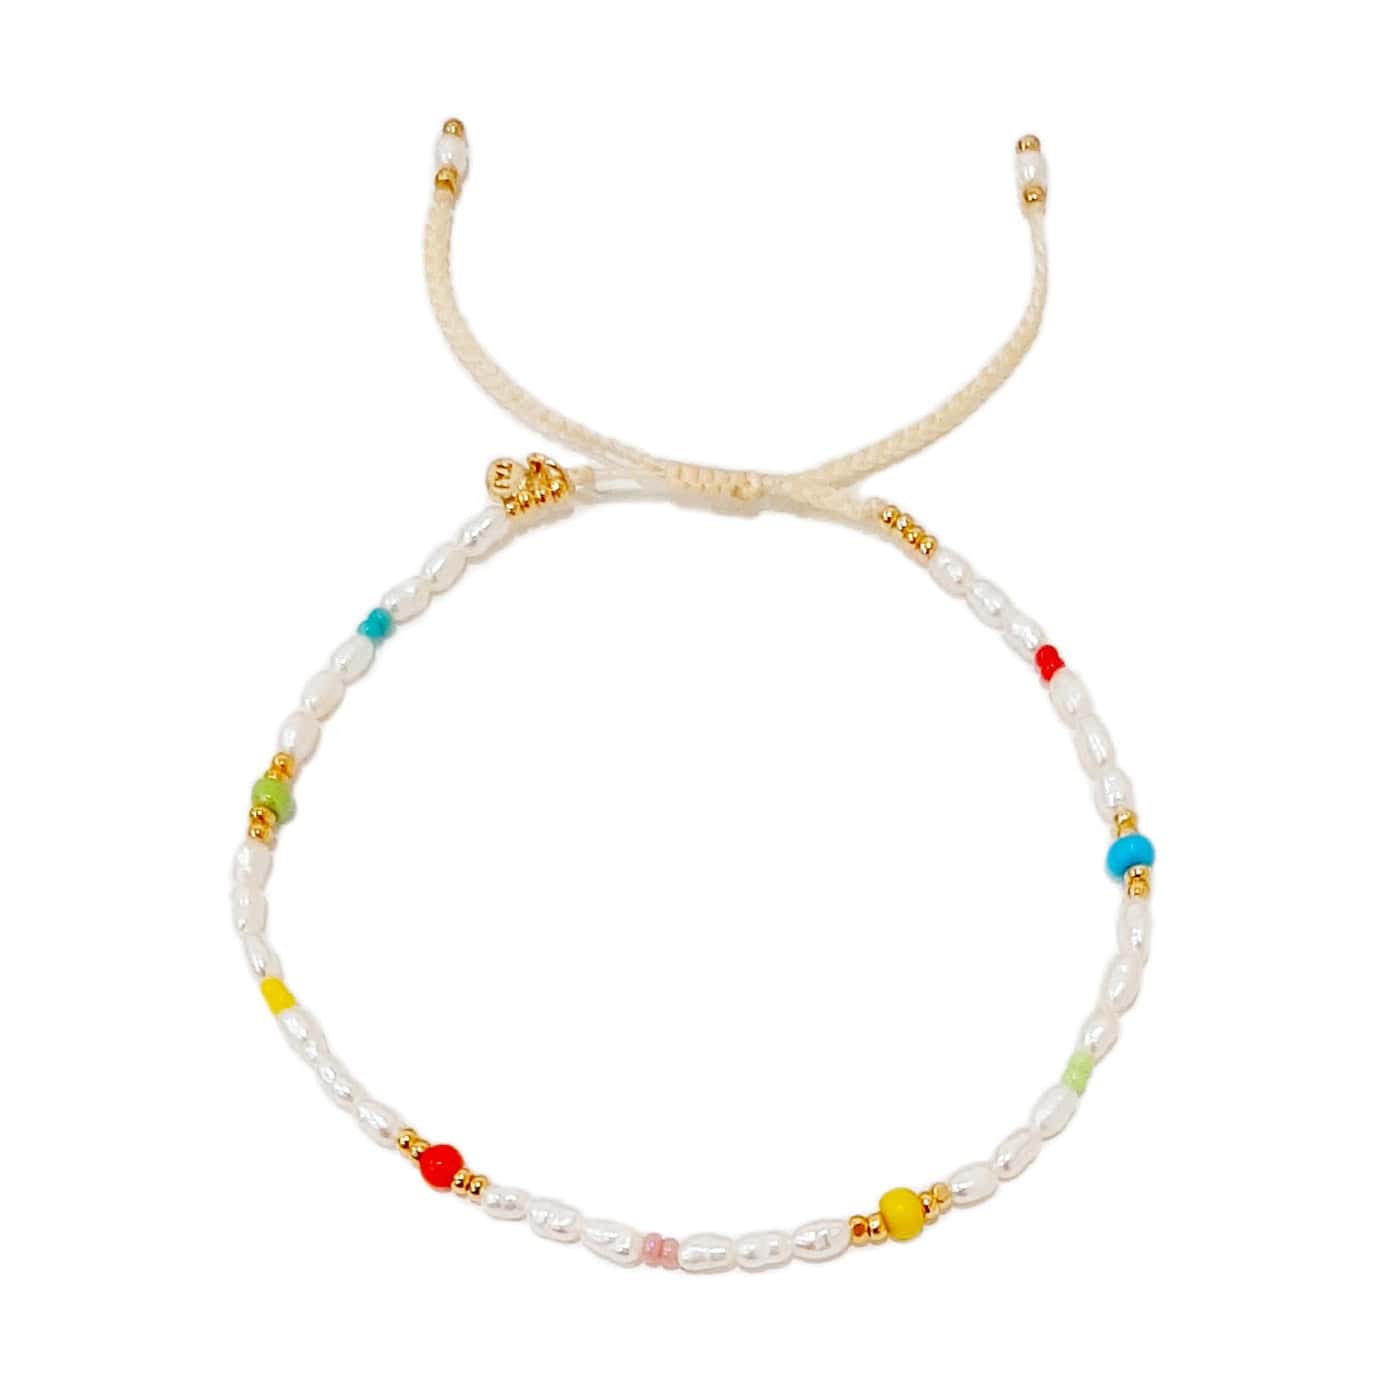 TAI JEWELRY Bracelet Handmade Seed Pearl Bracelet With Multi-Colored Seed Beads